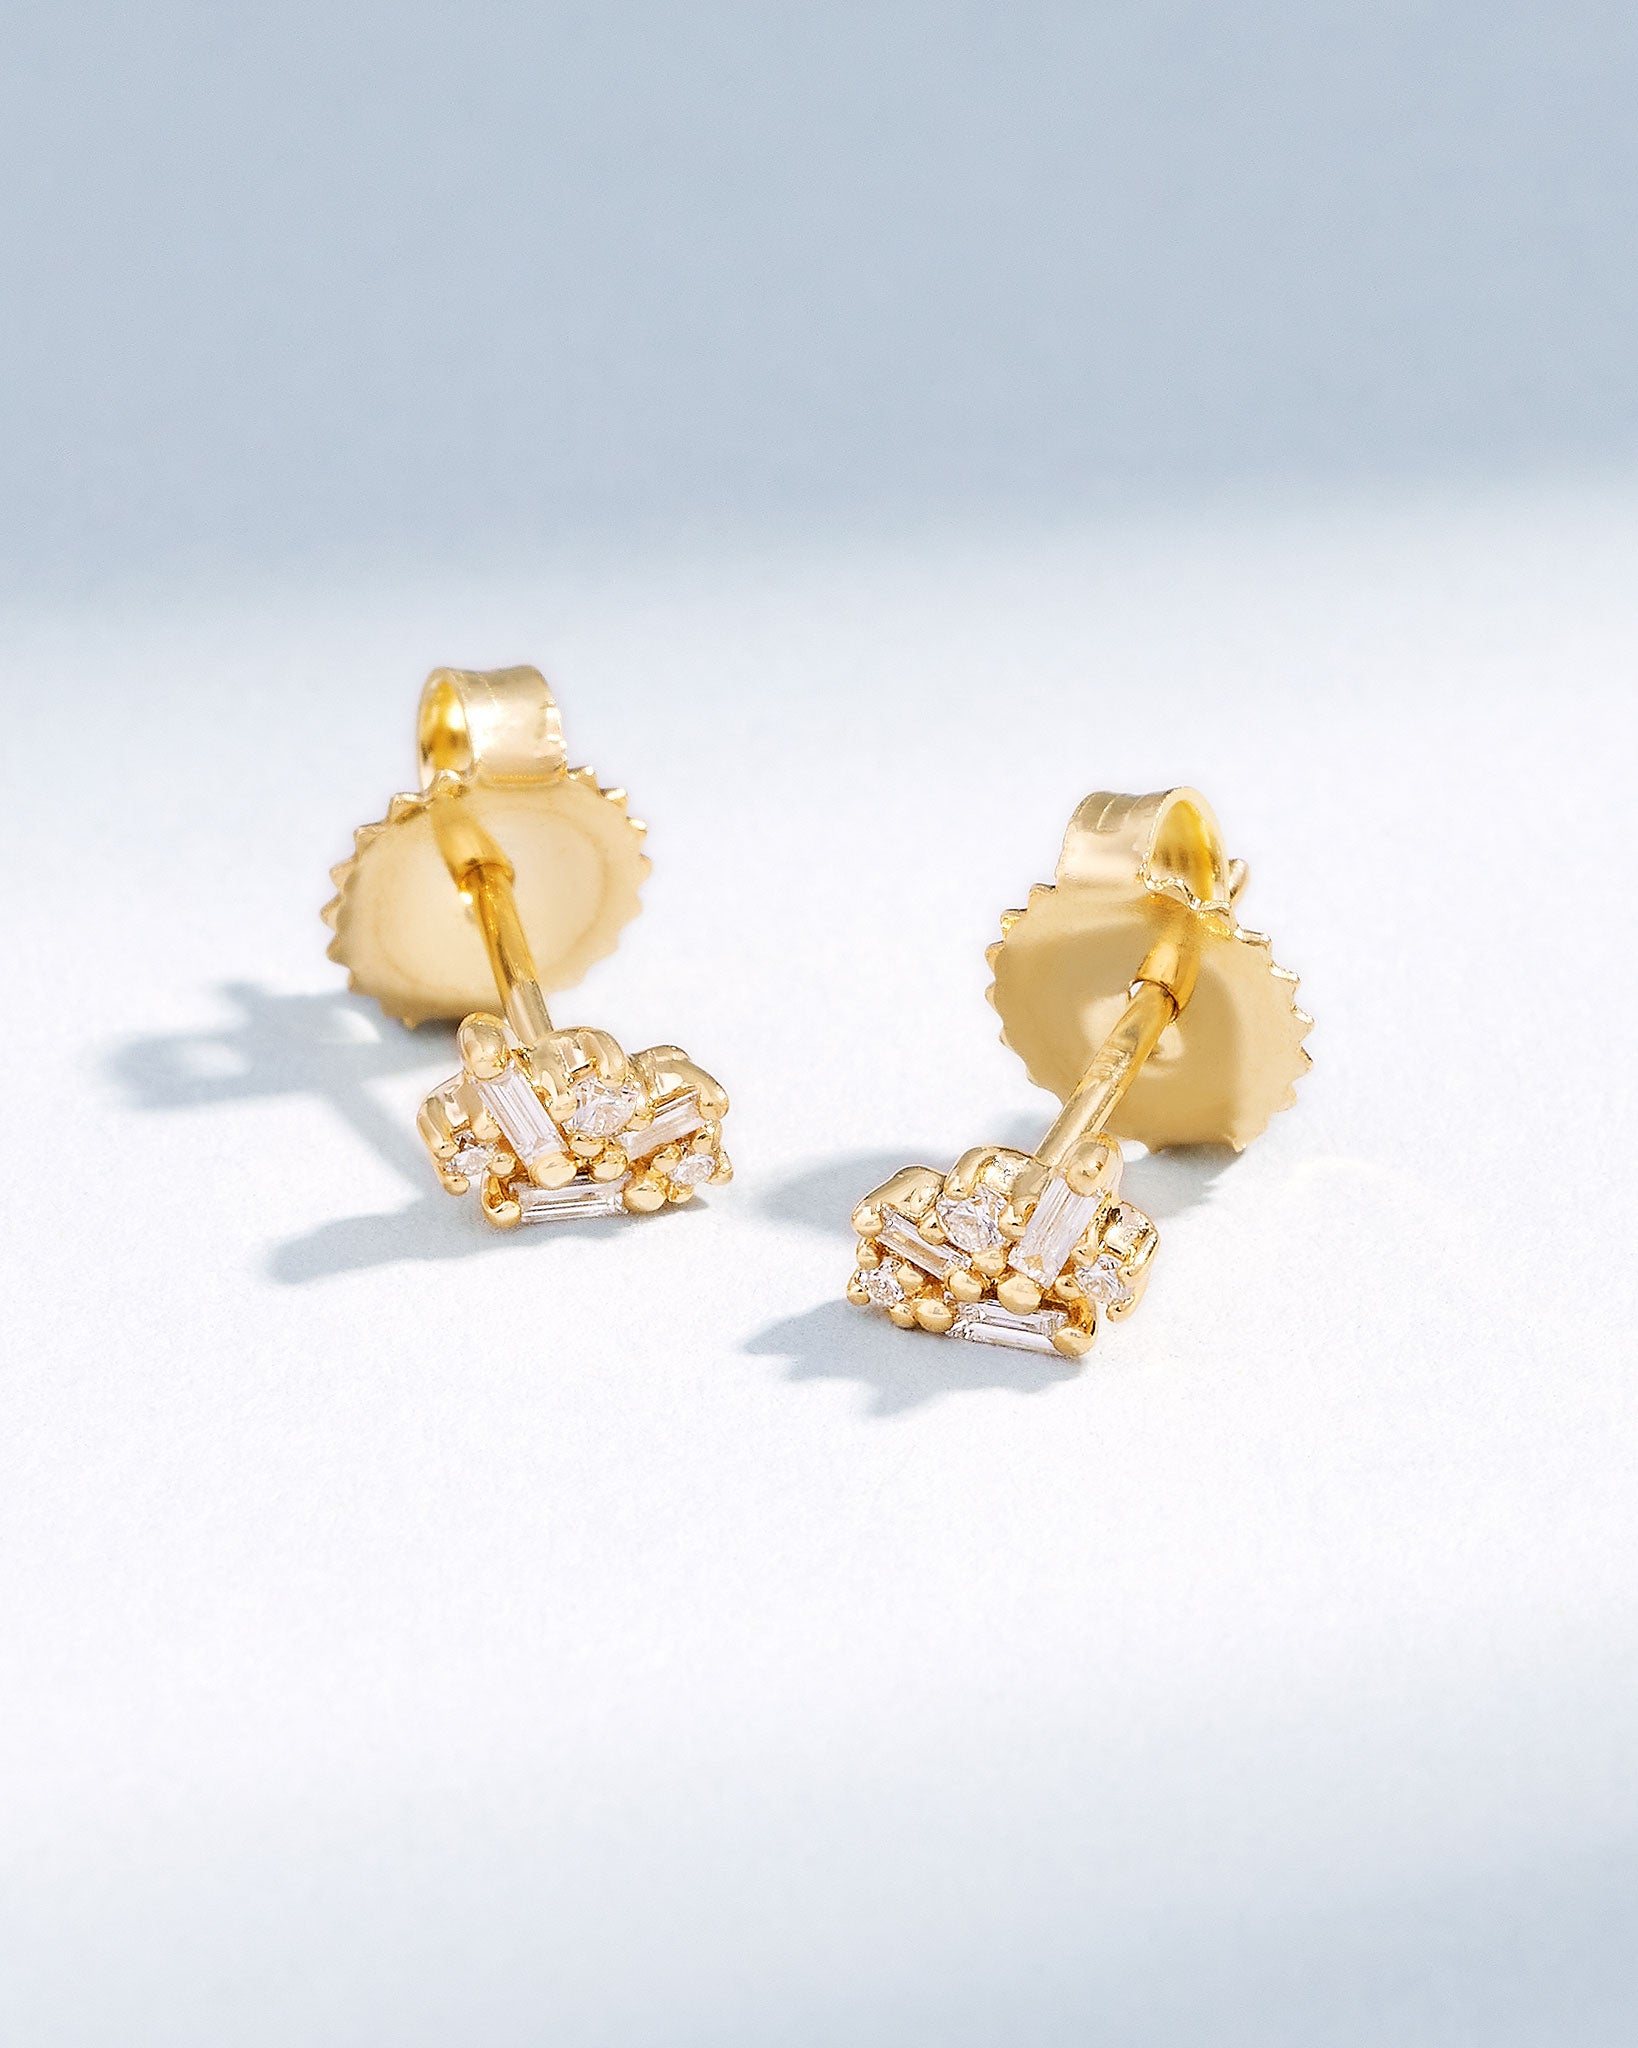 Suzanne Kalan Classic Diamond Felicity Stud Earrings in 18k yellow gold